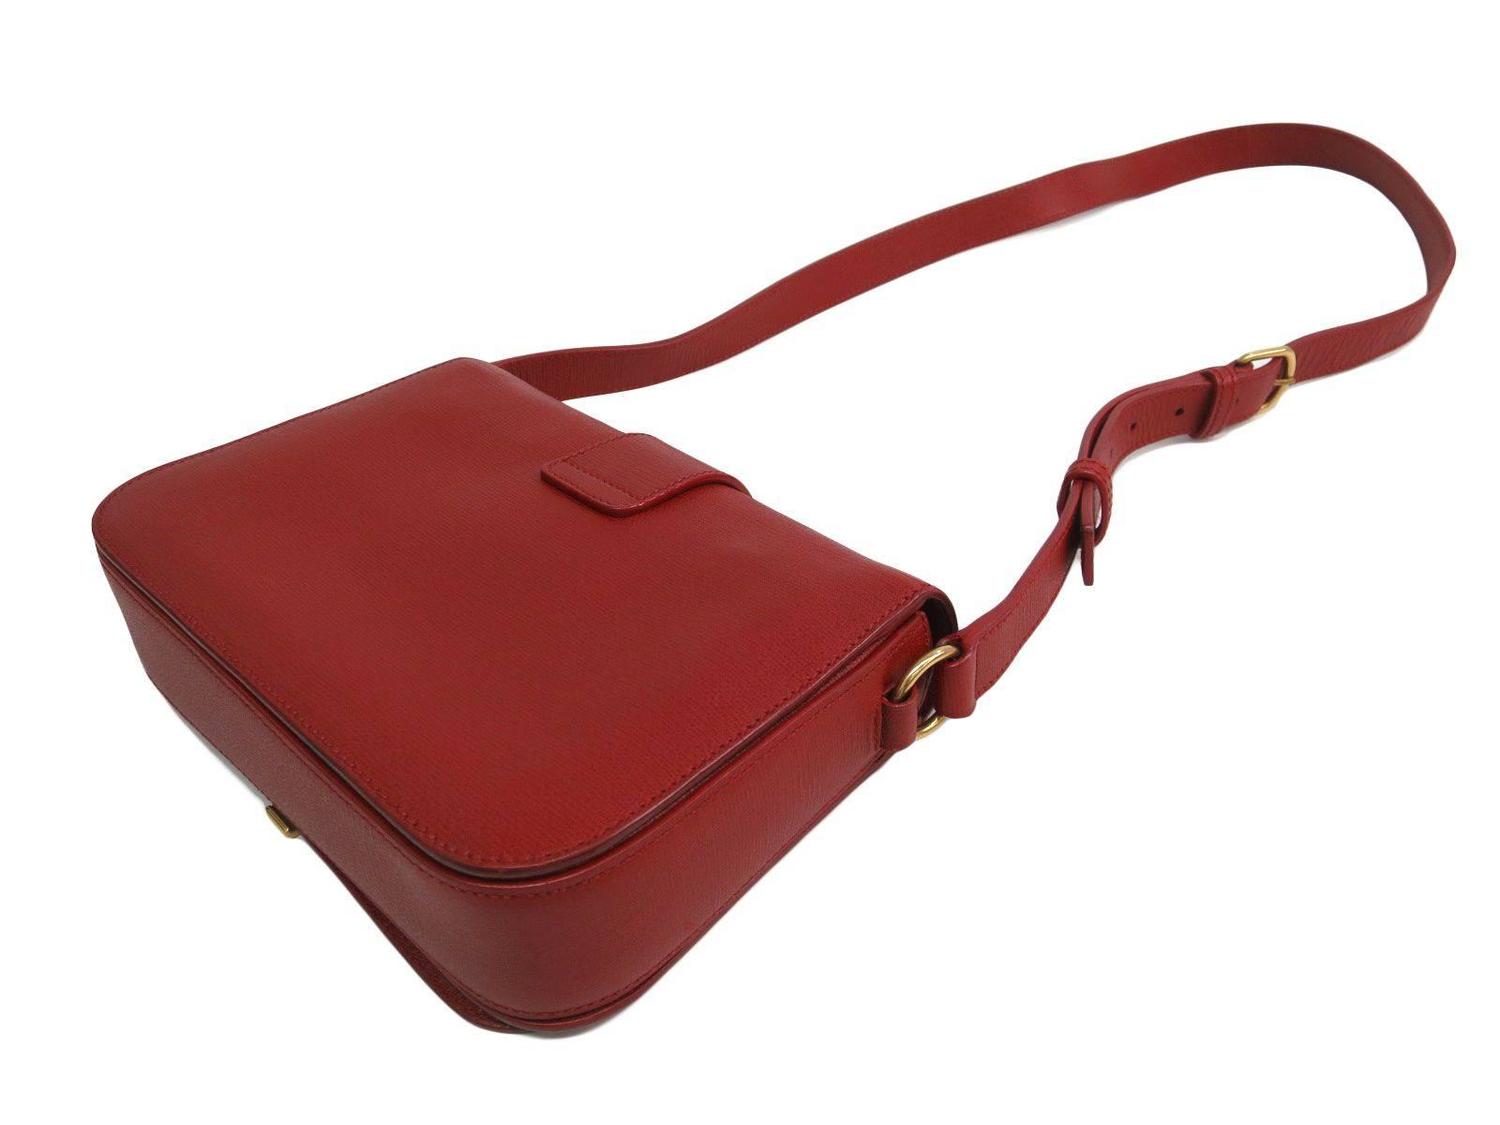 ysl red leather clutch bag chyc  